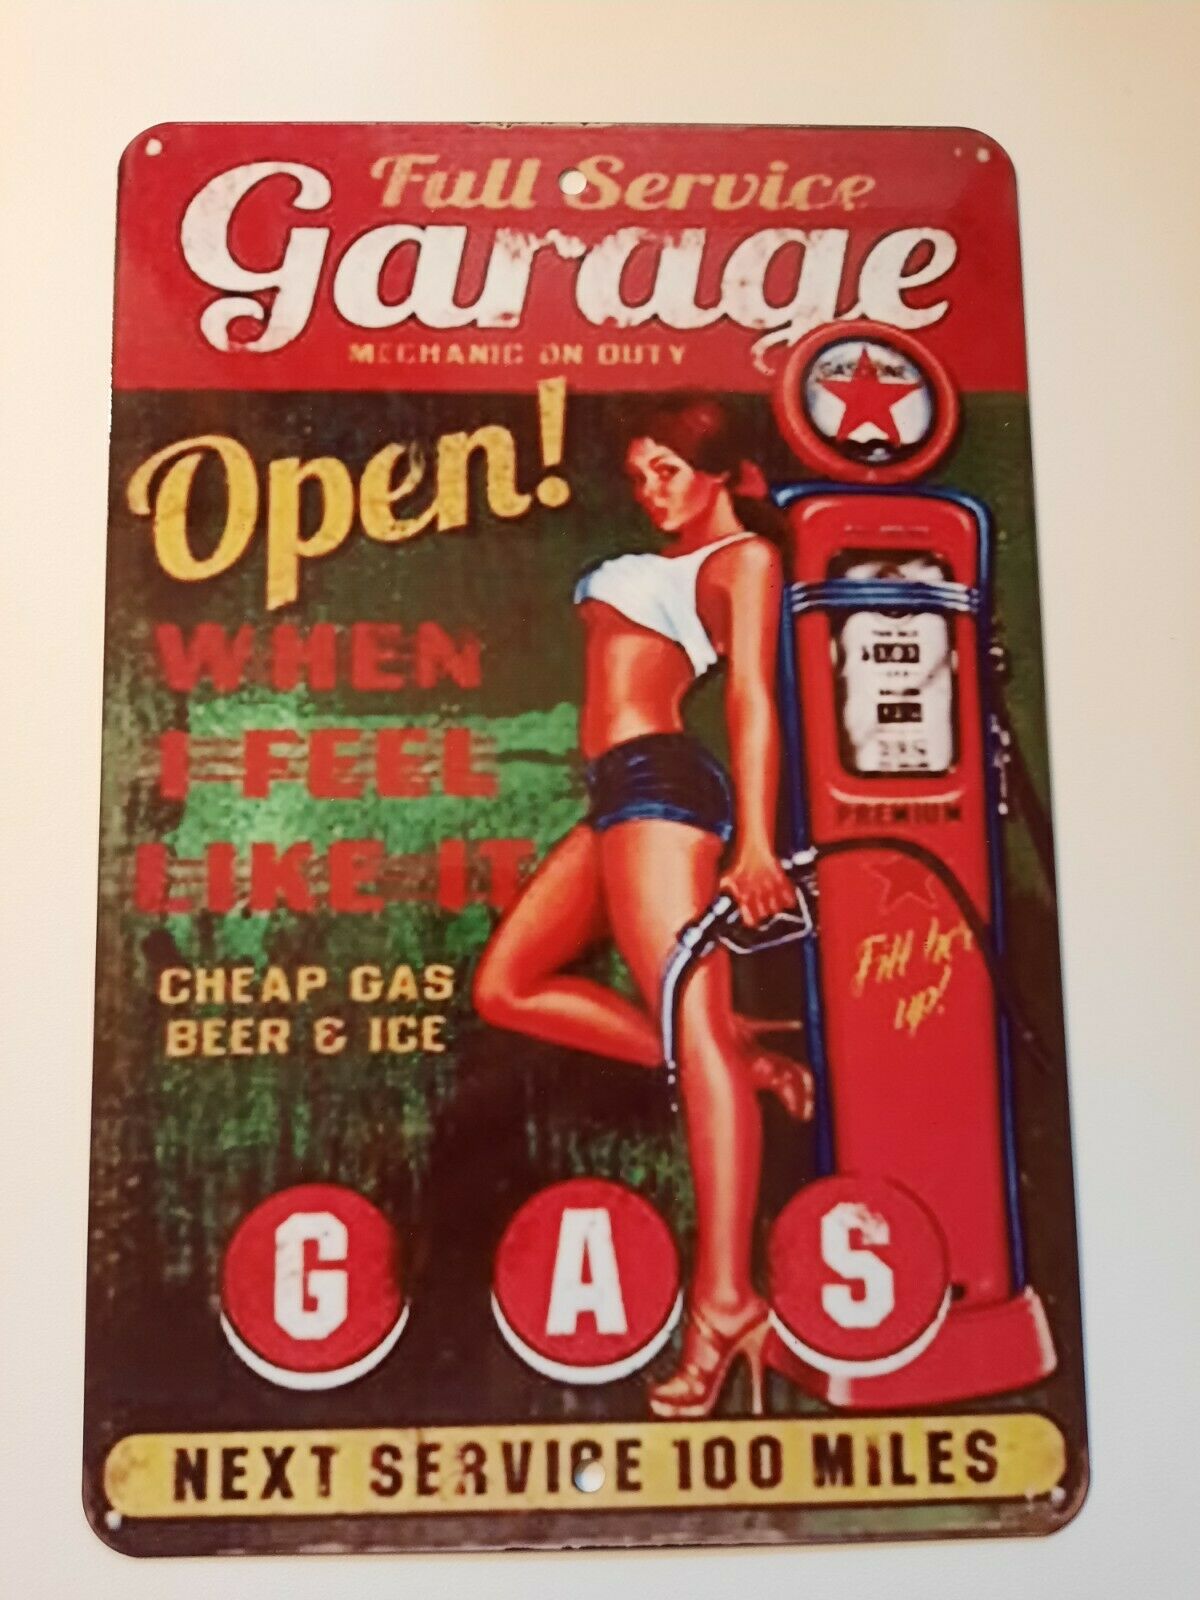 Full Service Garage Open When I feel Like it 8x12 Metal Wall Garage Sign Garage Poster